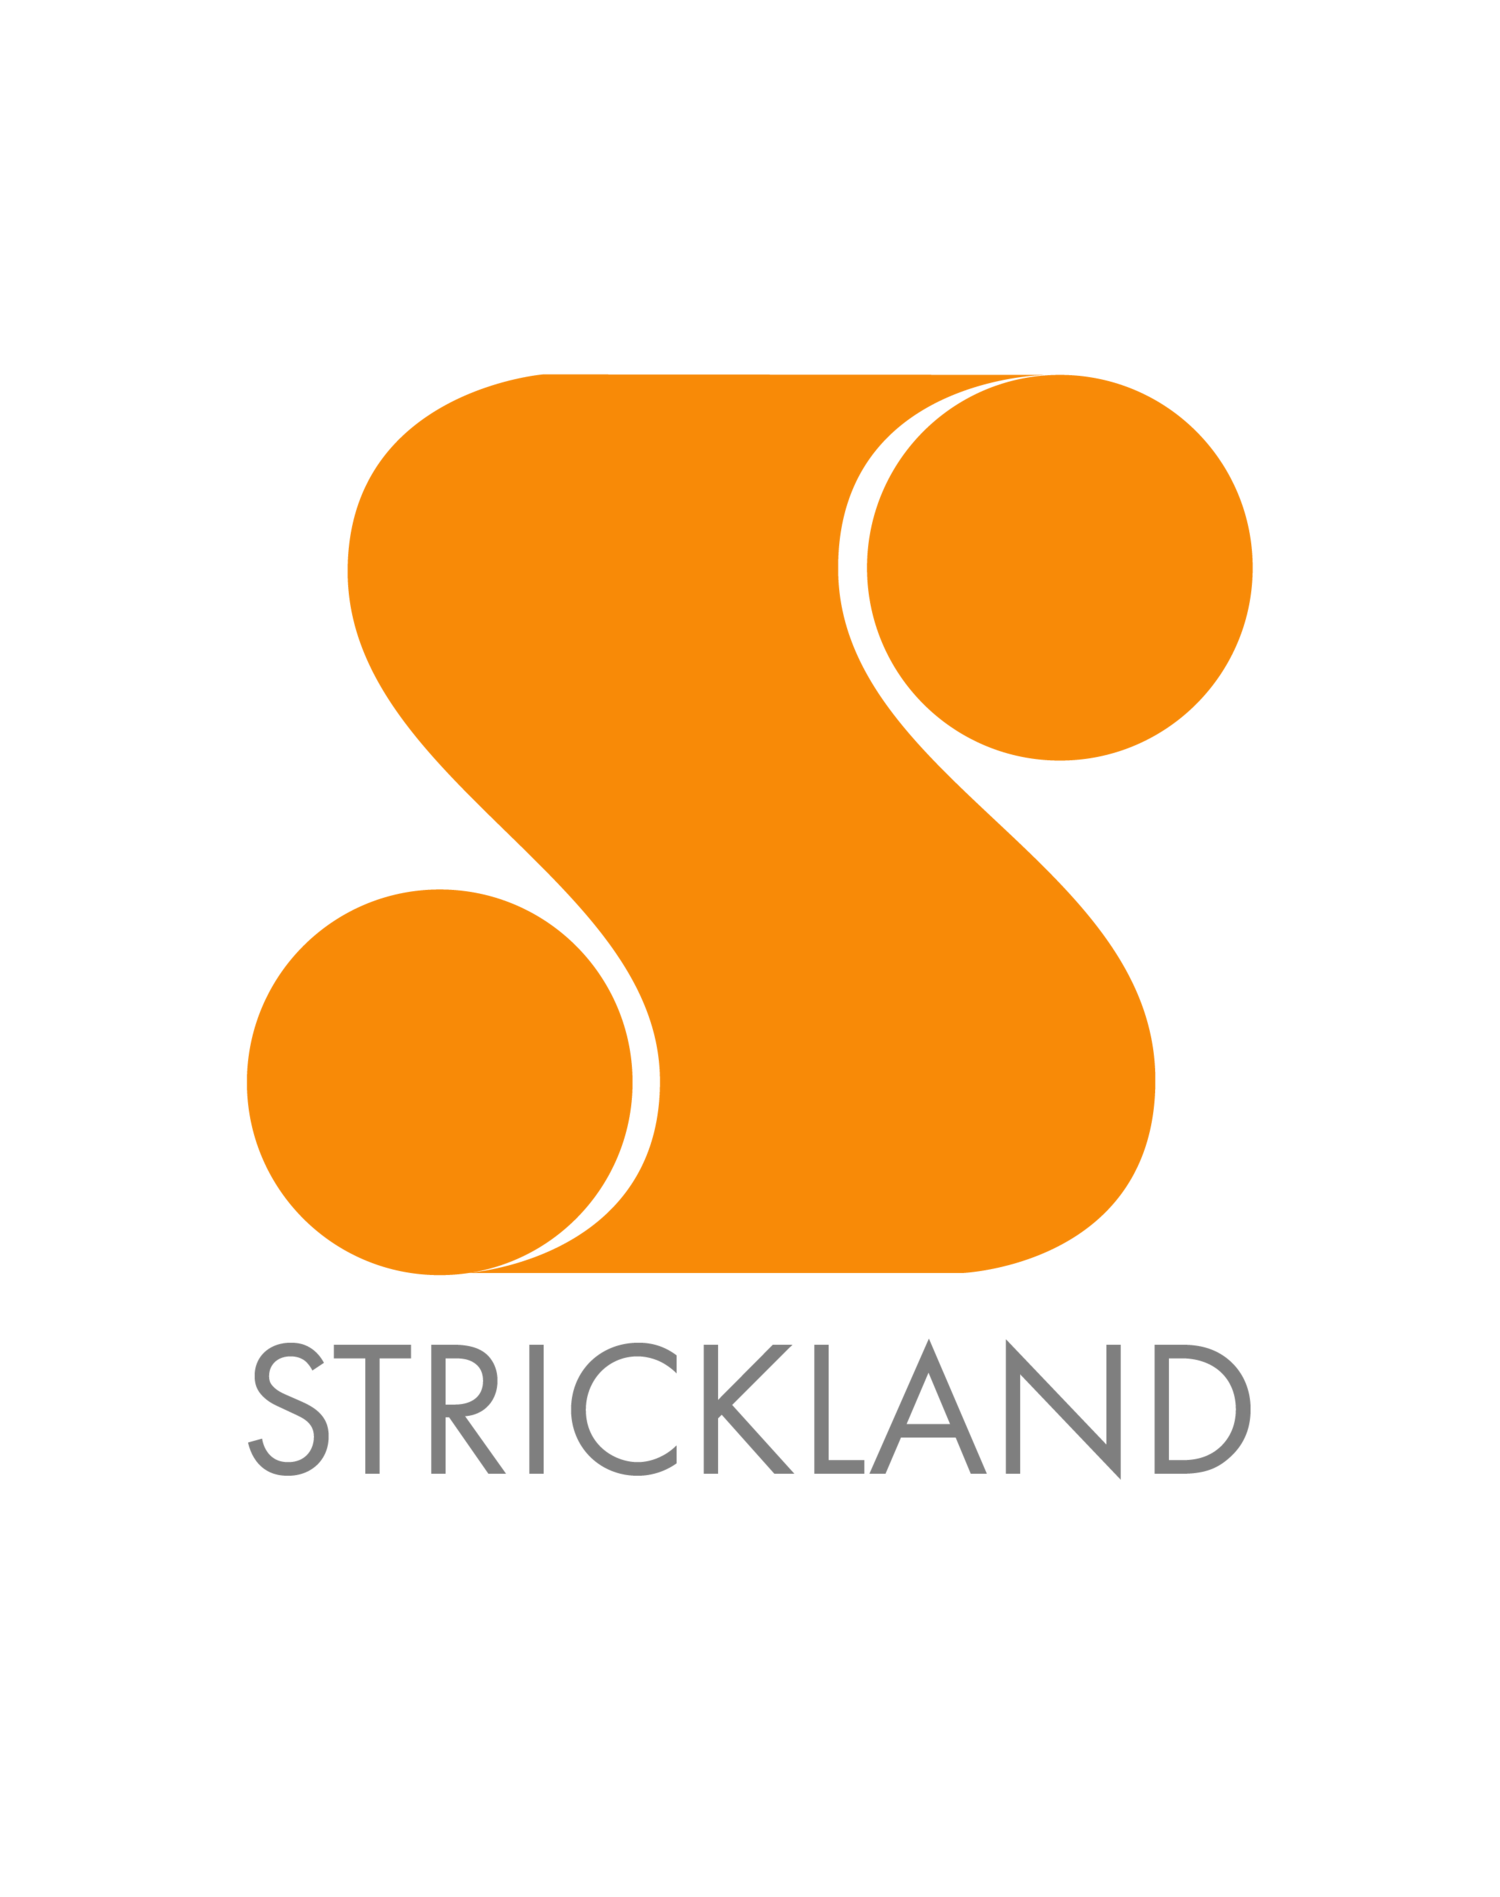 Strickland Companies